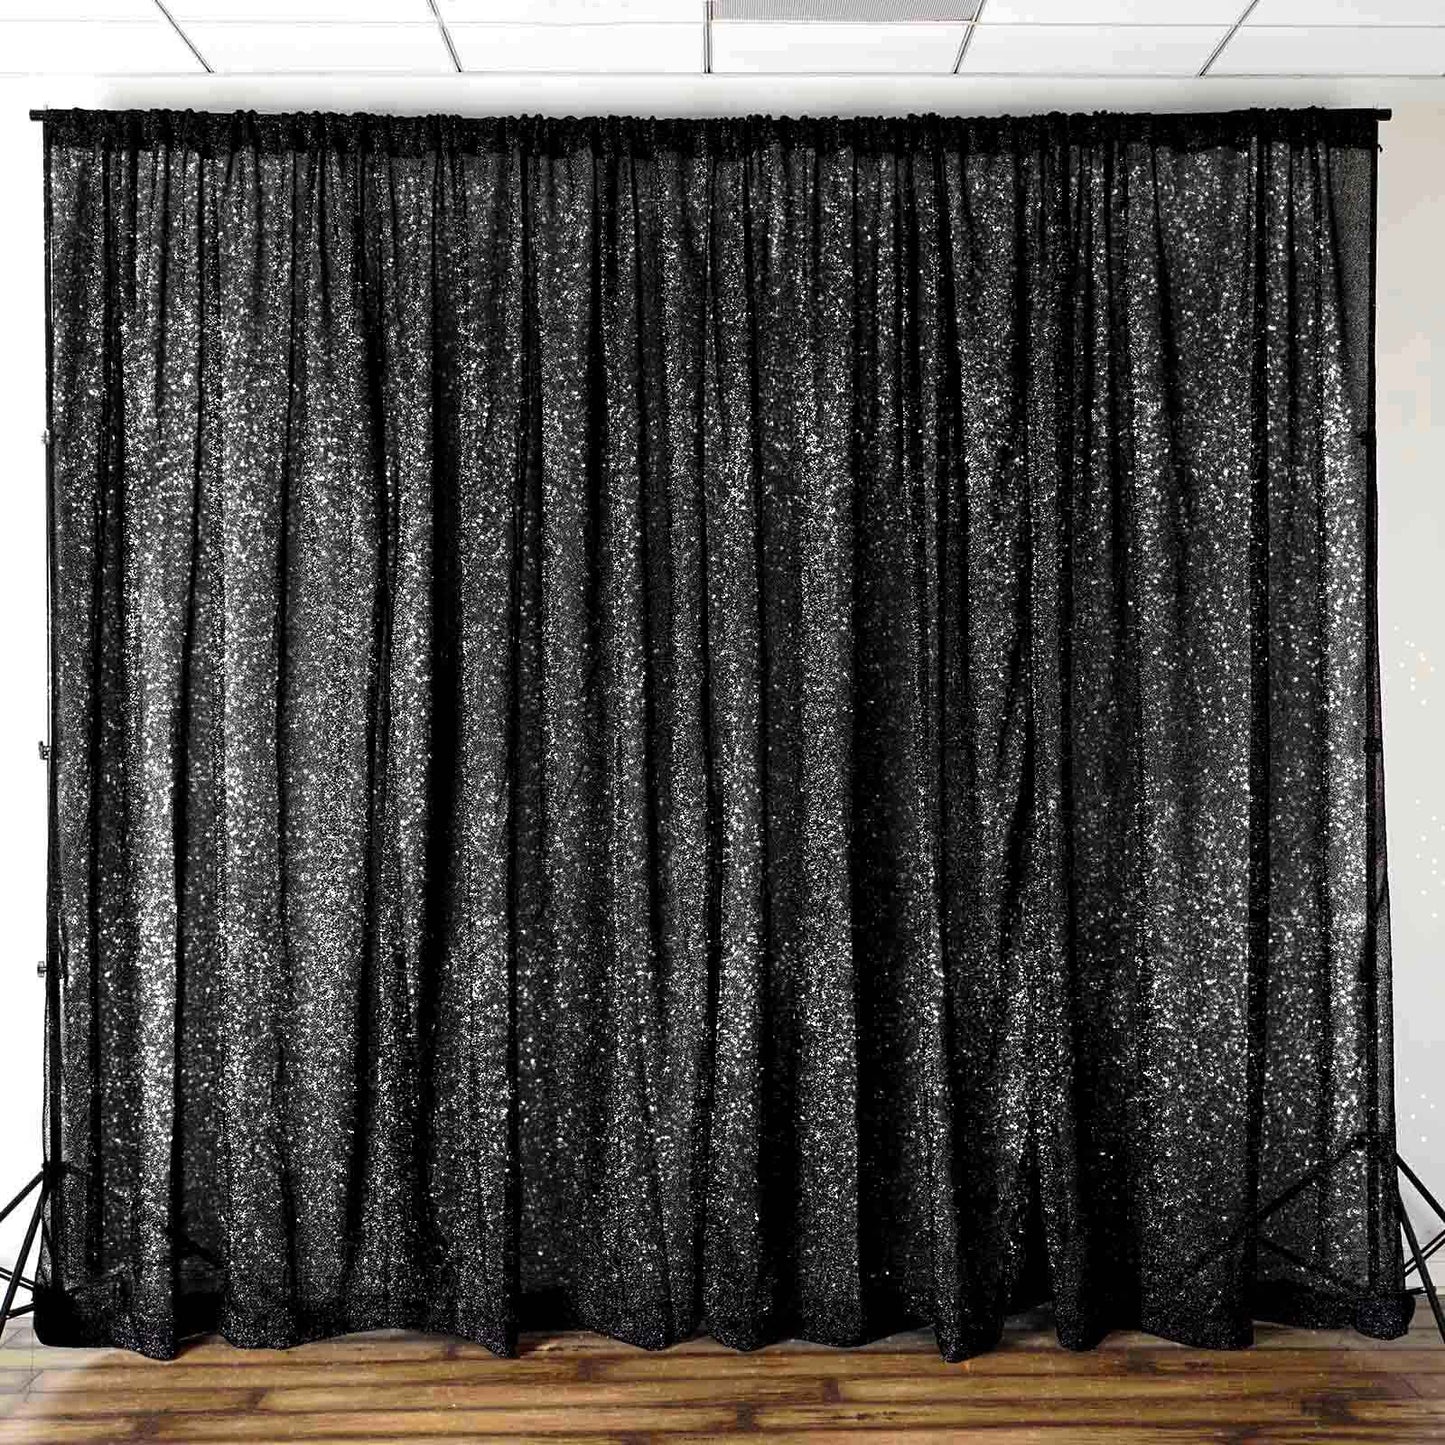 Black Sequin 8x8ft Wall Backdrop